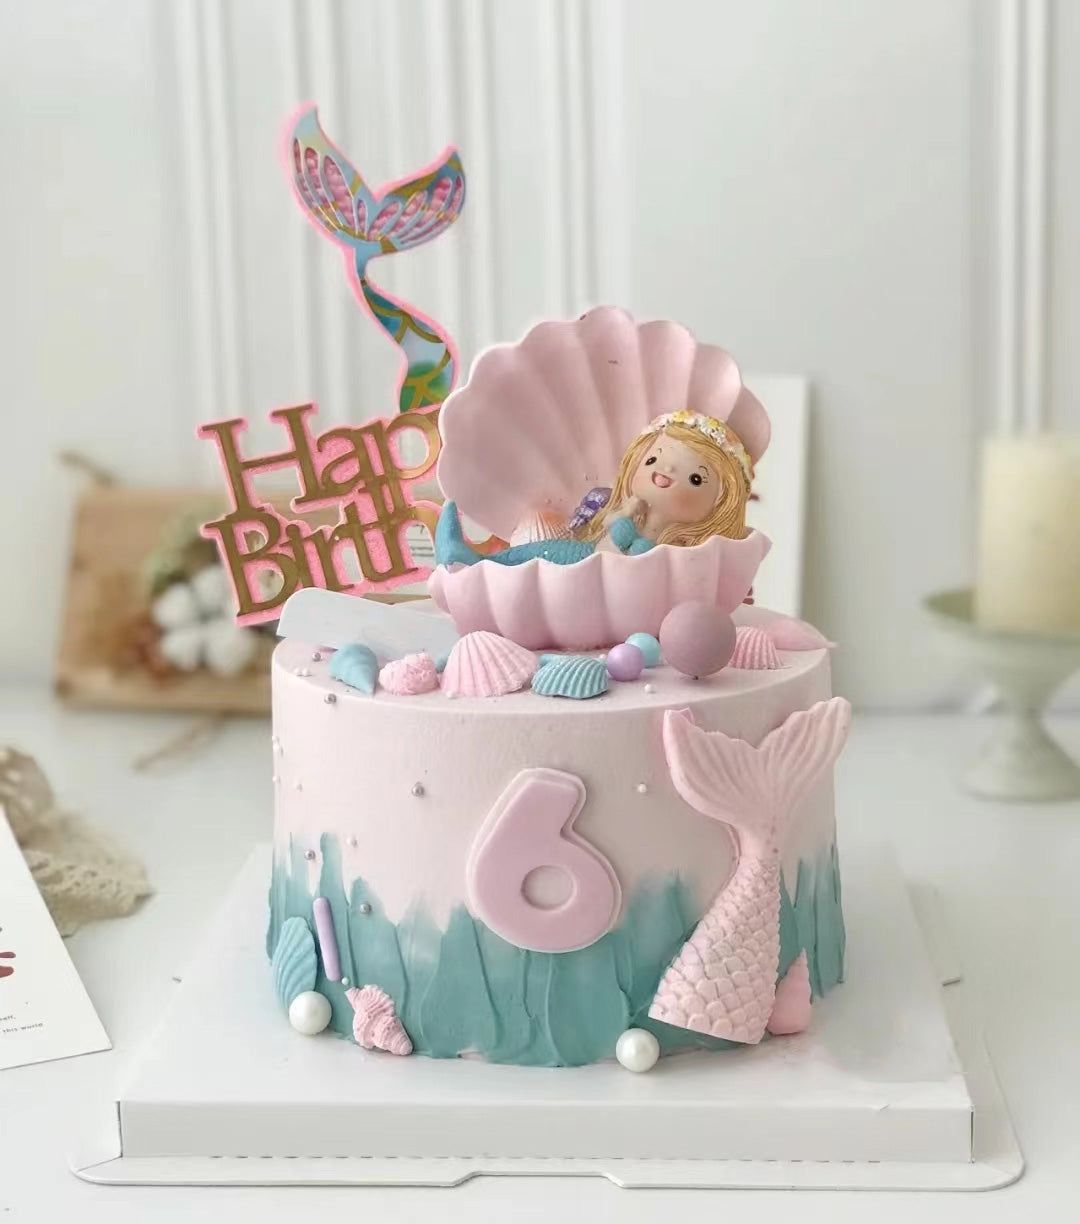 Happy 6th Birthday Edible Cake Topper